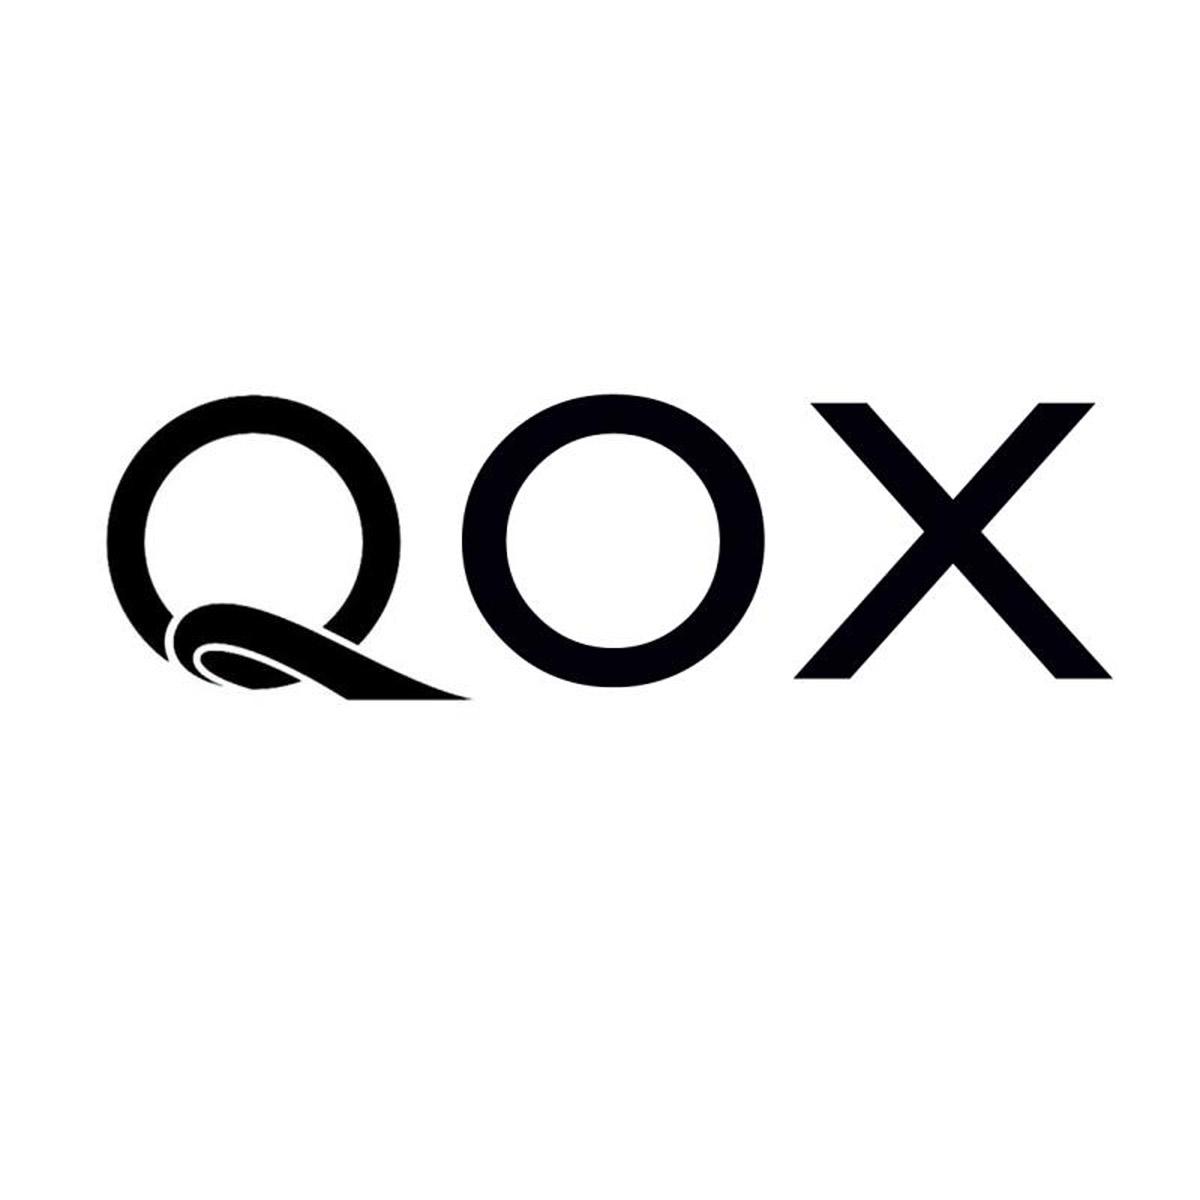 QOX干衣机商标转让费用买卖交易流程